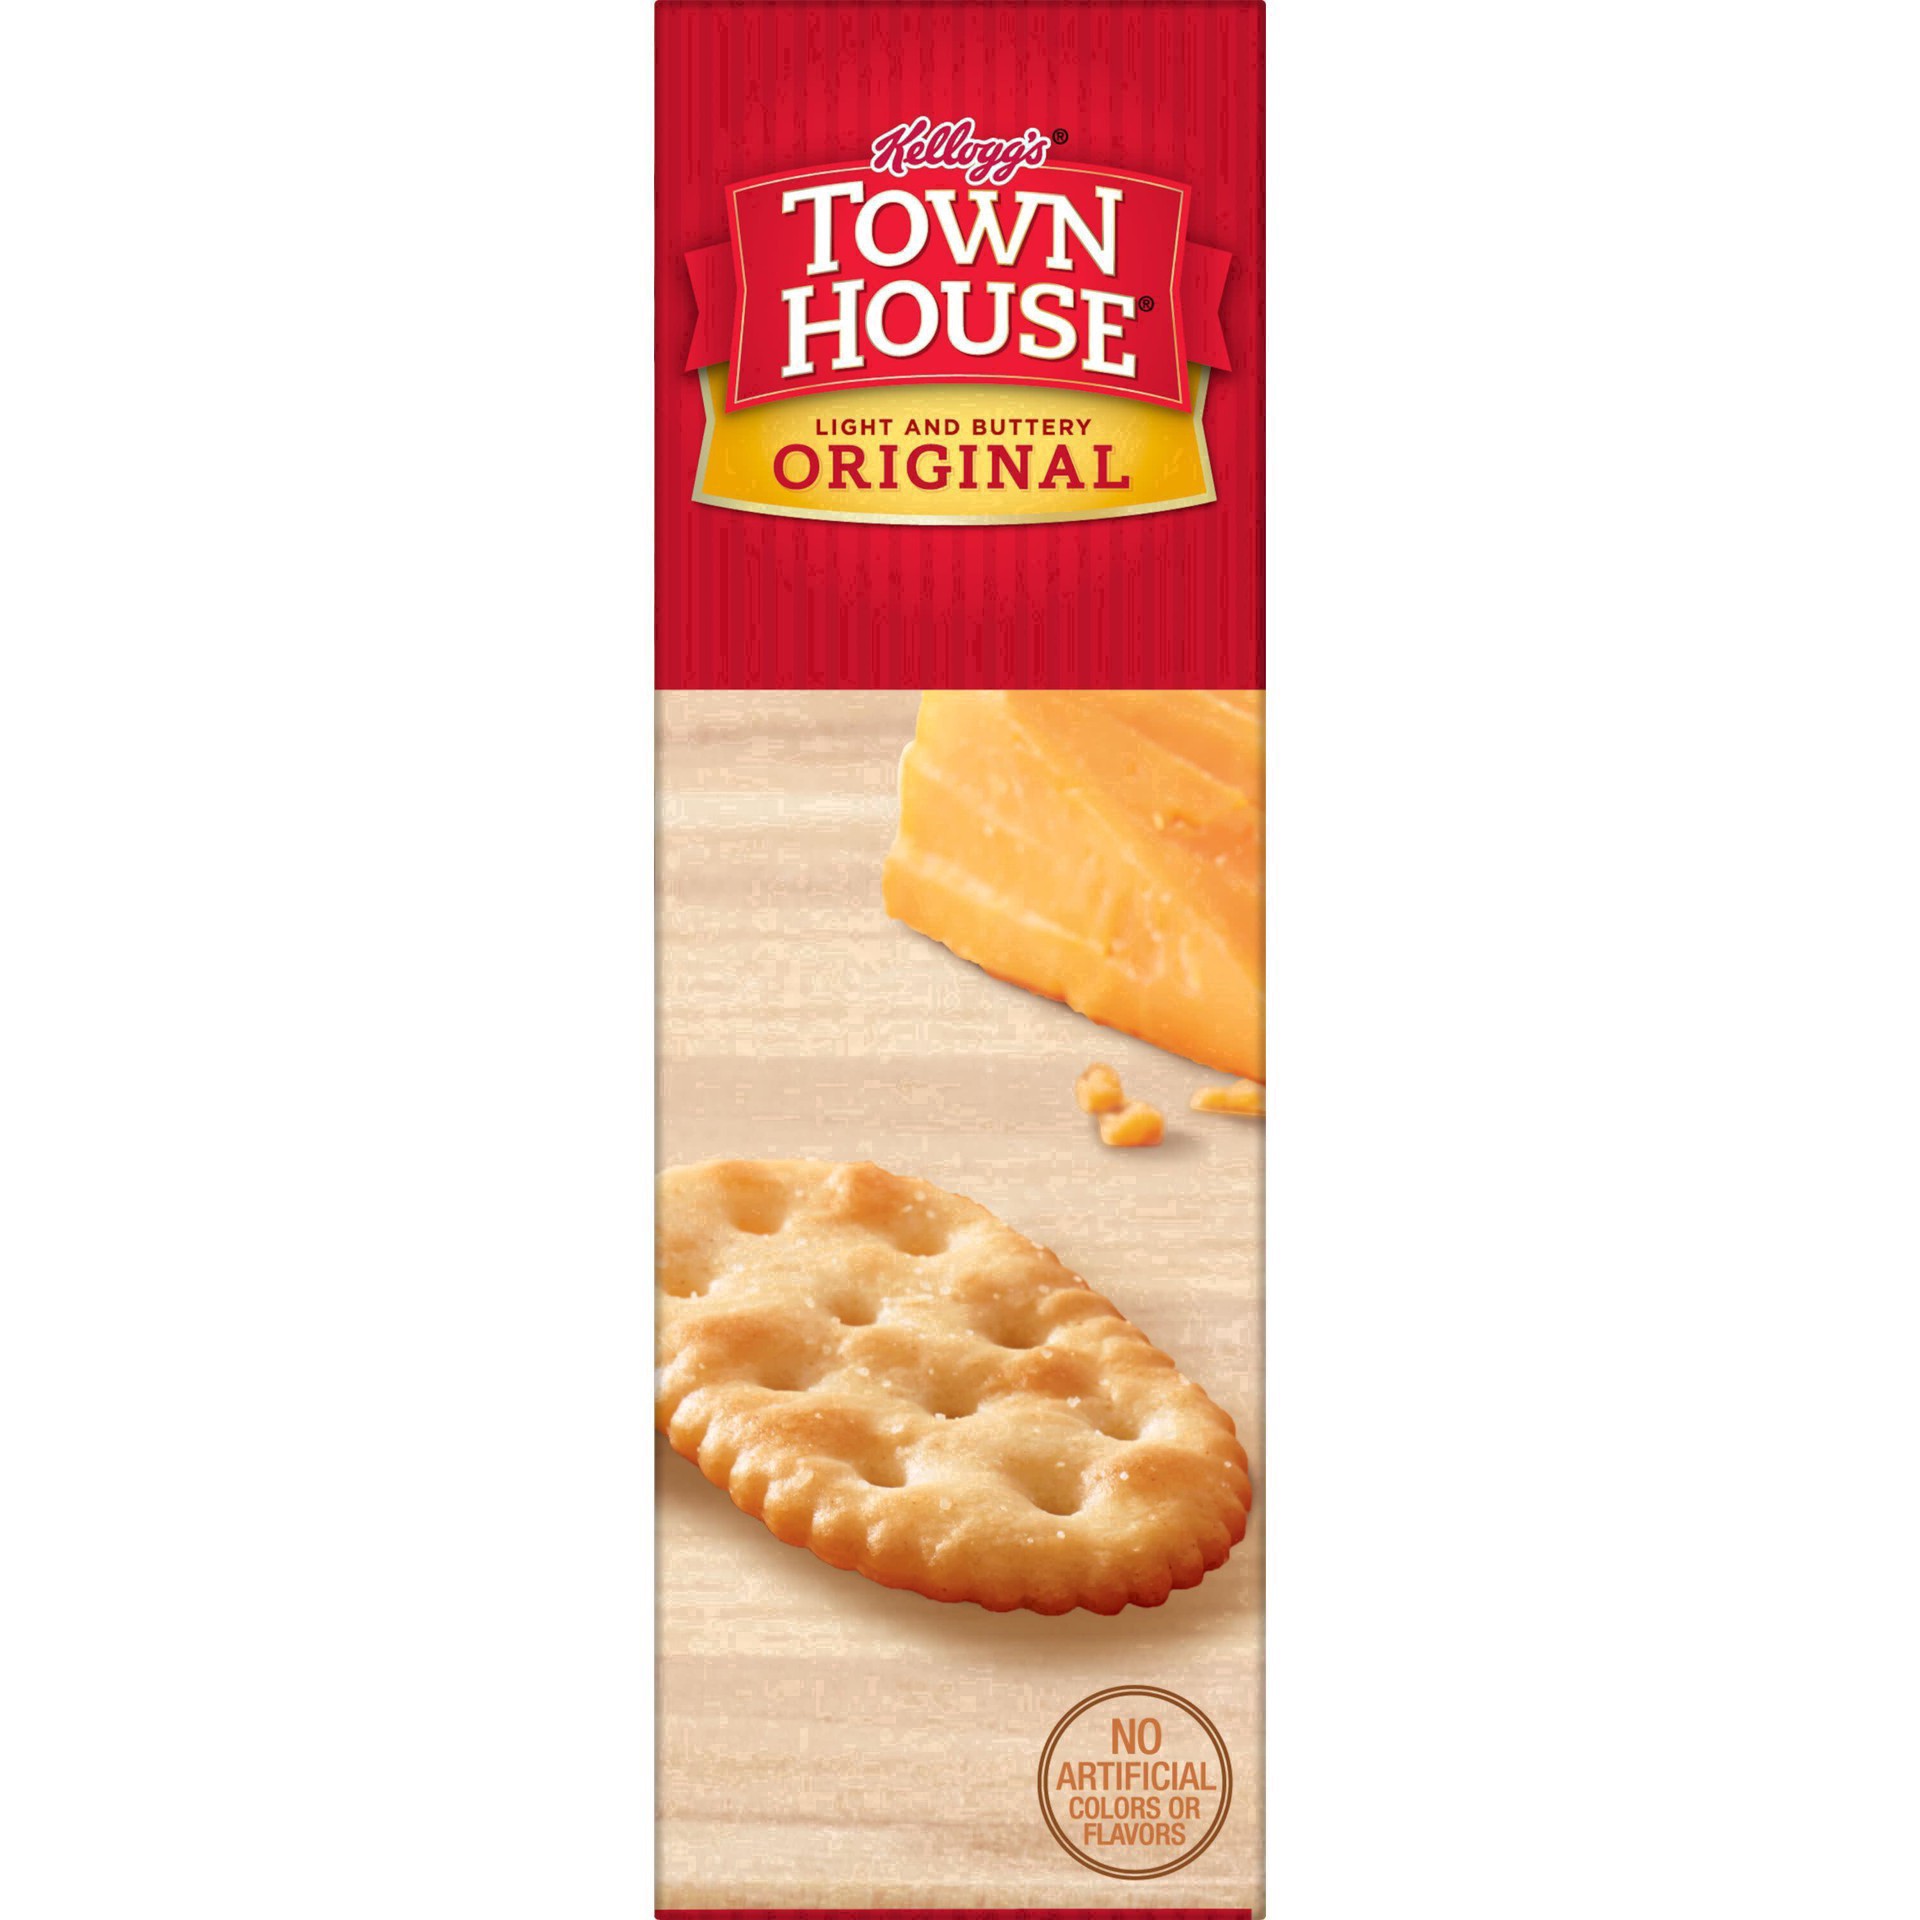 slide 49 of 101, Town House Kellogg's Town House Original Snack Crackers - 13.8oz, 13.8 oz